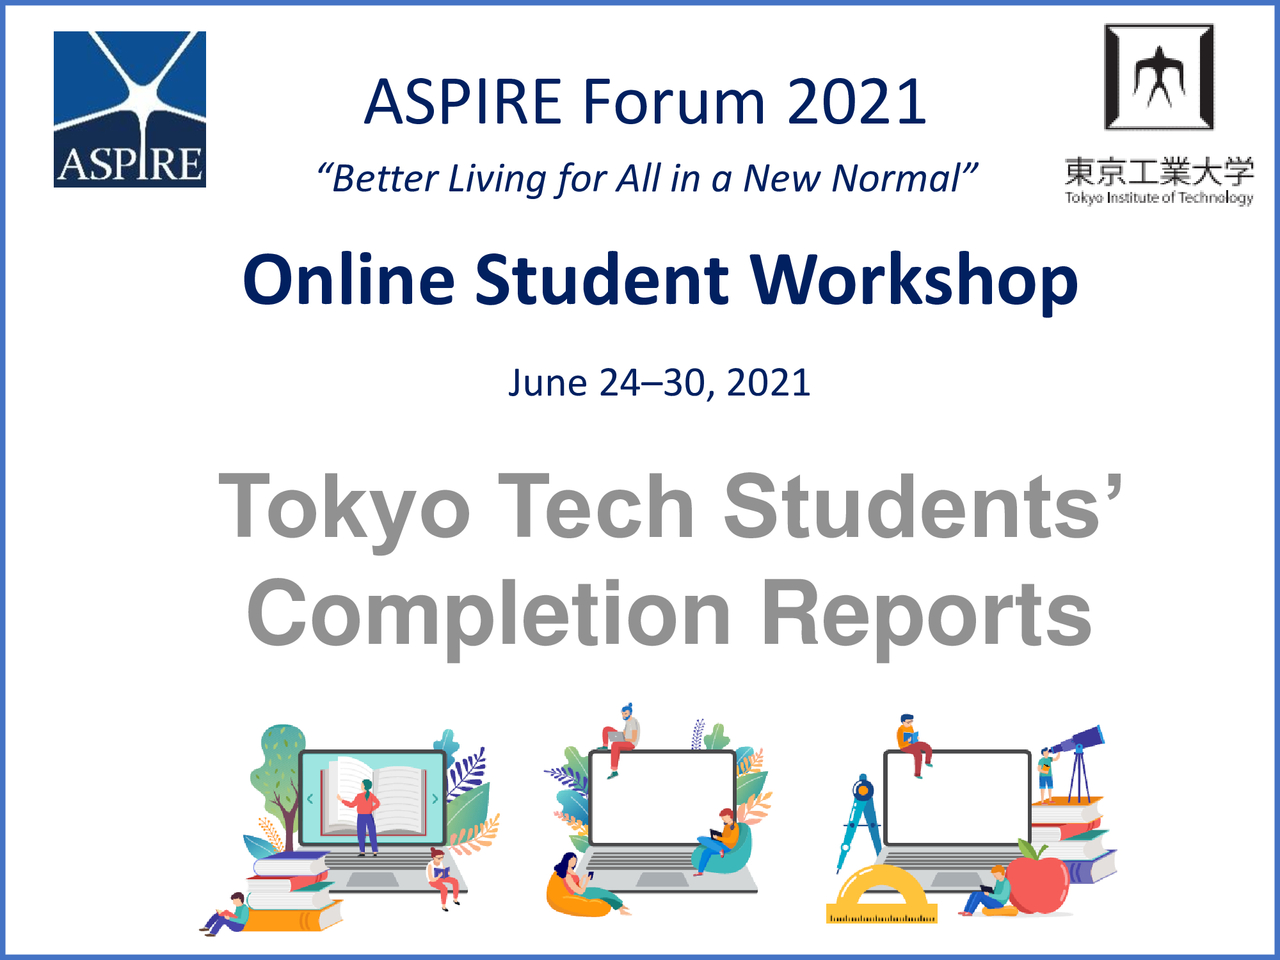 ASPIRE Form Online Student Workshop, Tokyo Institute of Technology, June 24-30, 2021